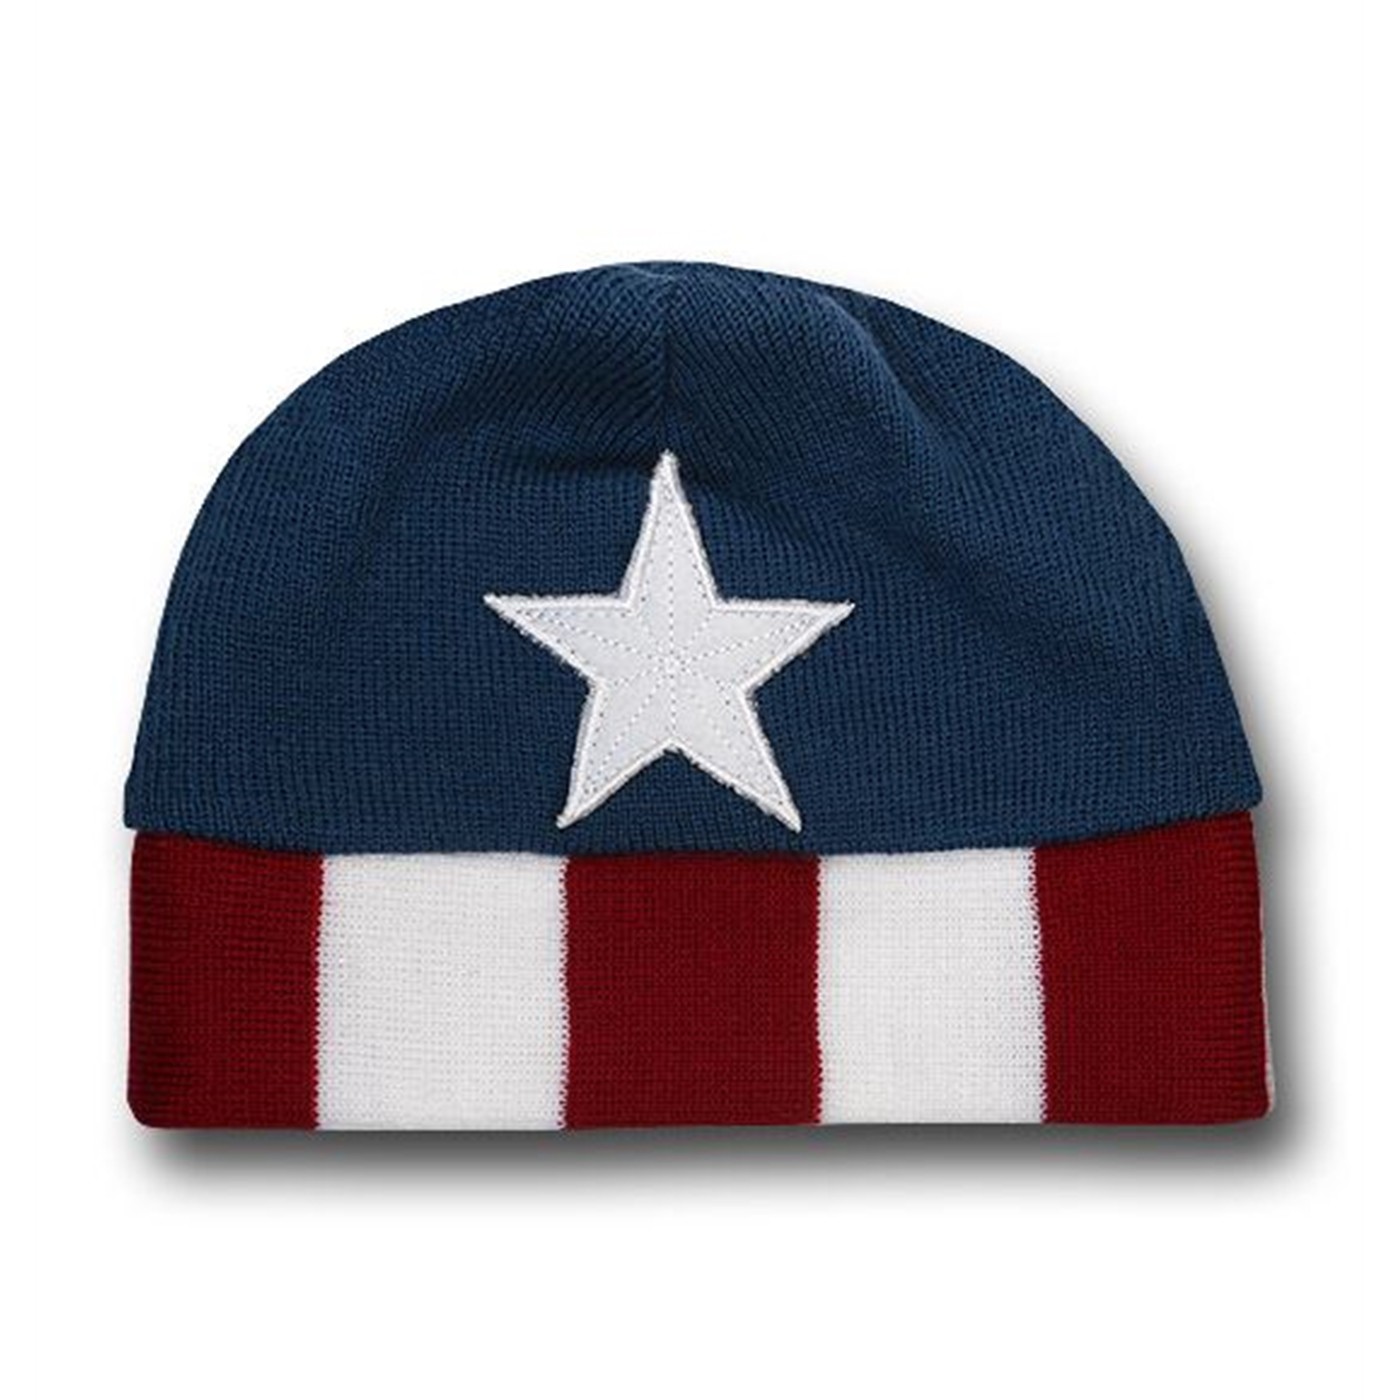 Captain America Stars and Stripes Beanie